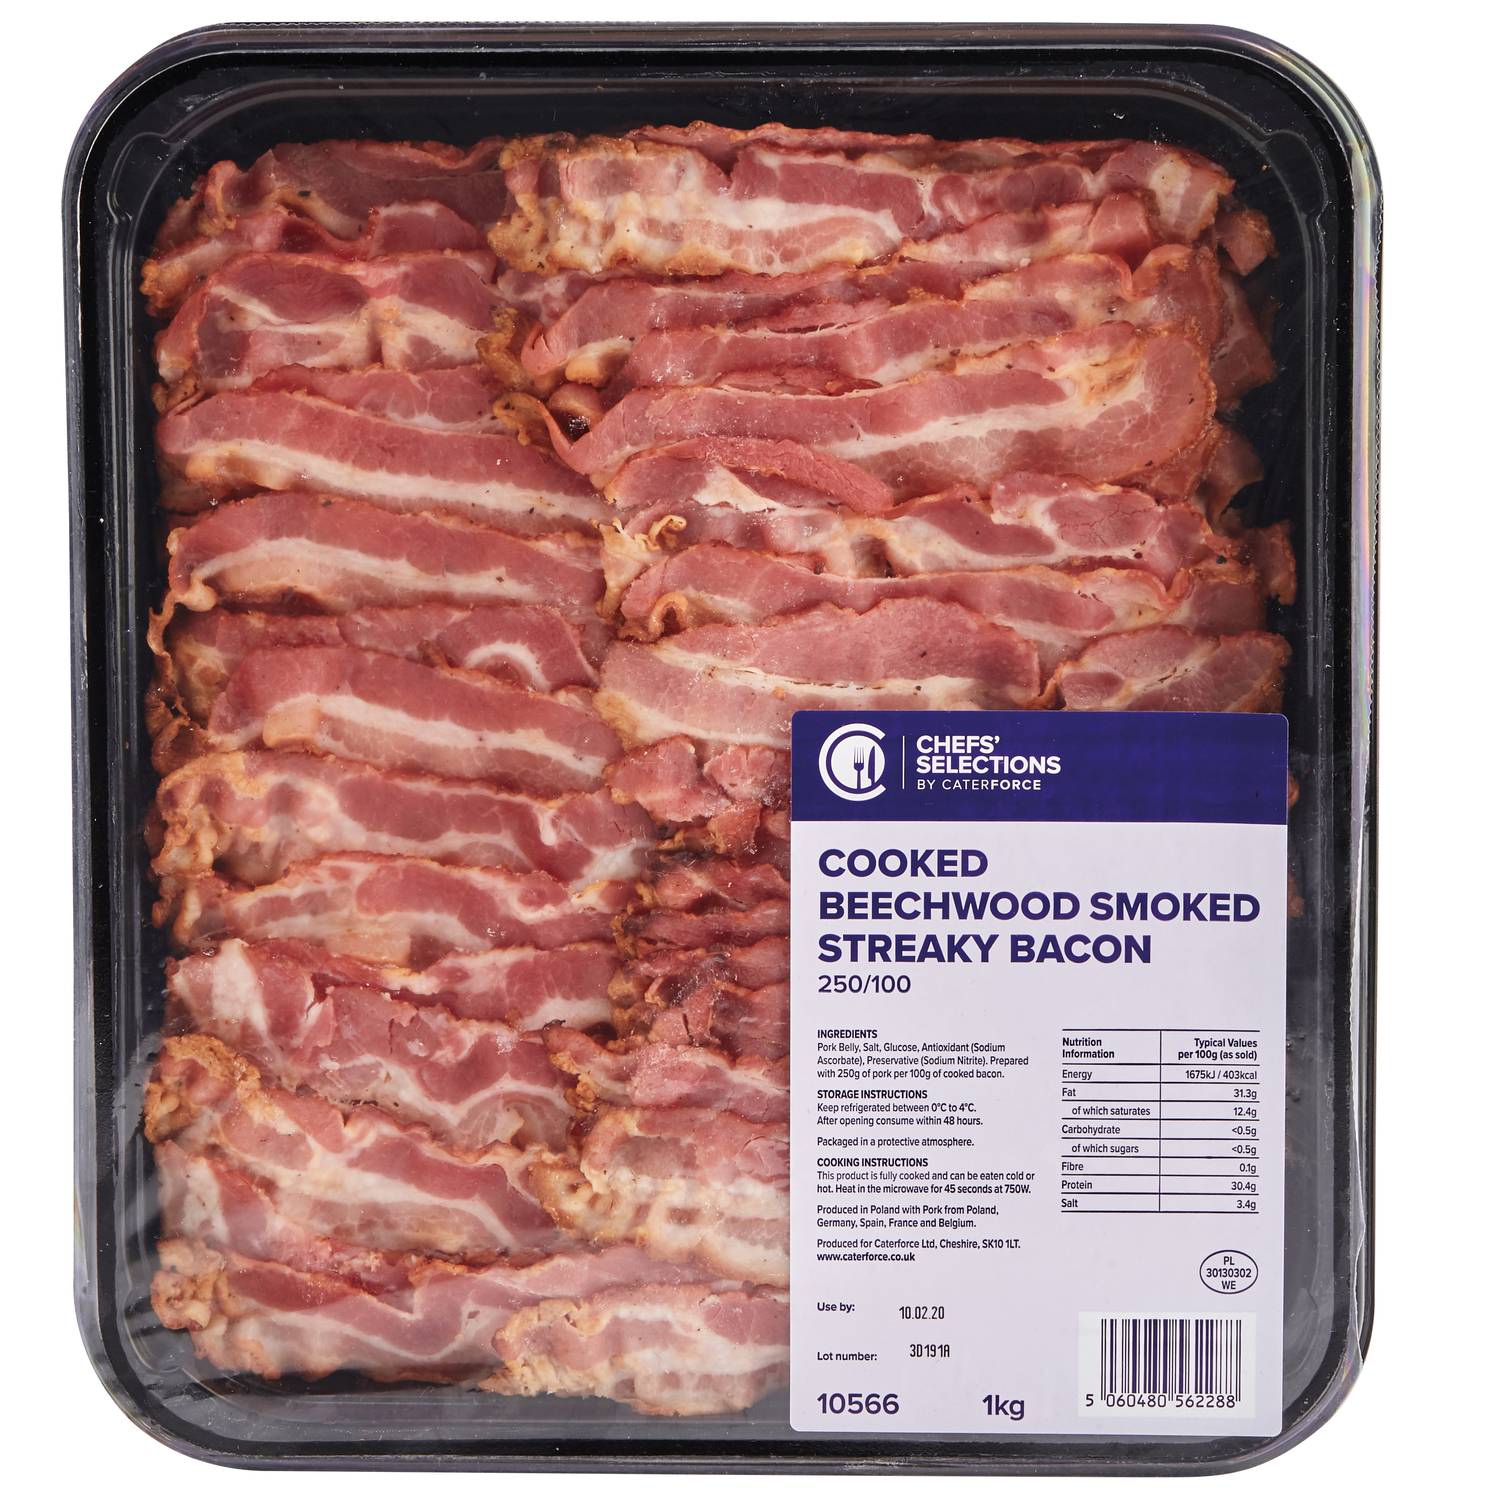 Chefs’ Selections Cooked Beechwood Smoked 250/100 Streaky Bacon (8 x 1kg)